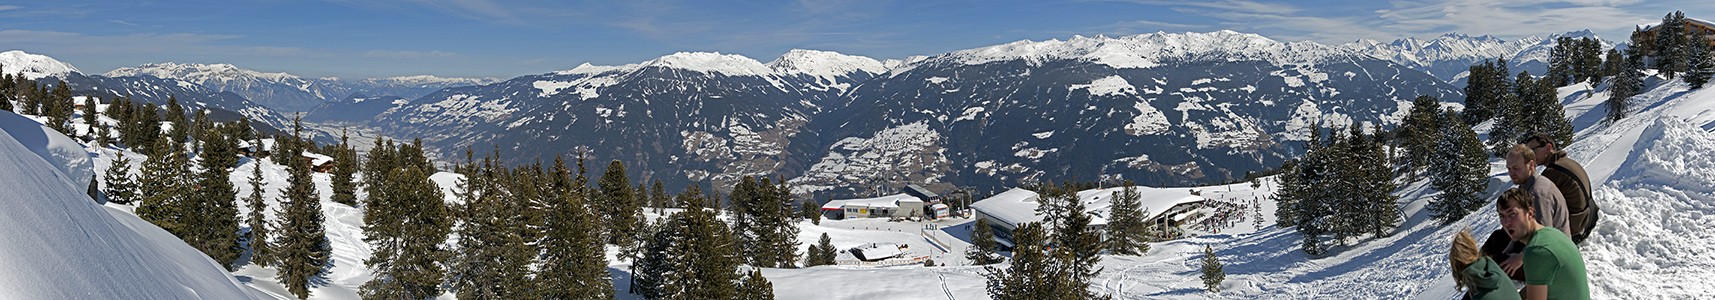 Hochzillertal Kitzbüheler Alpen